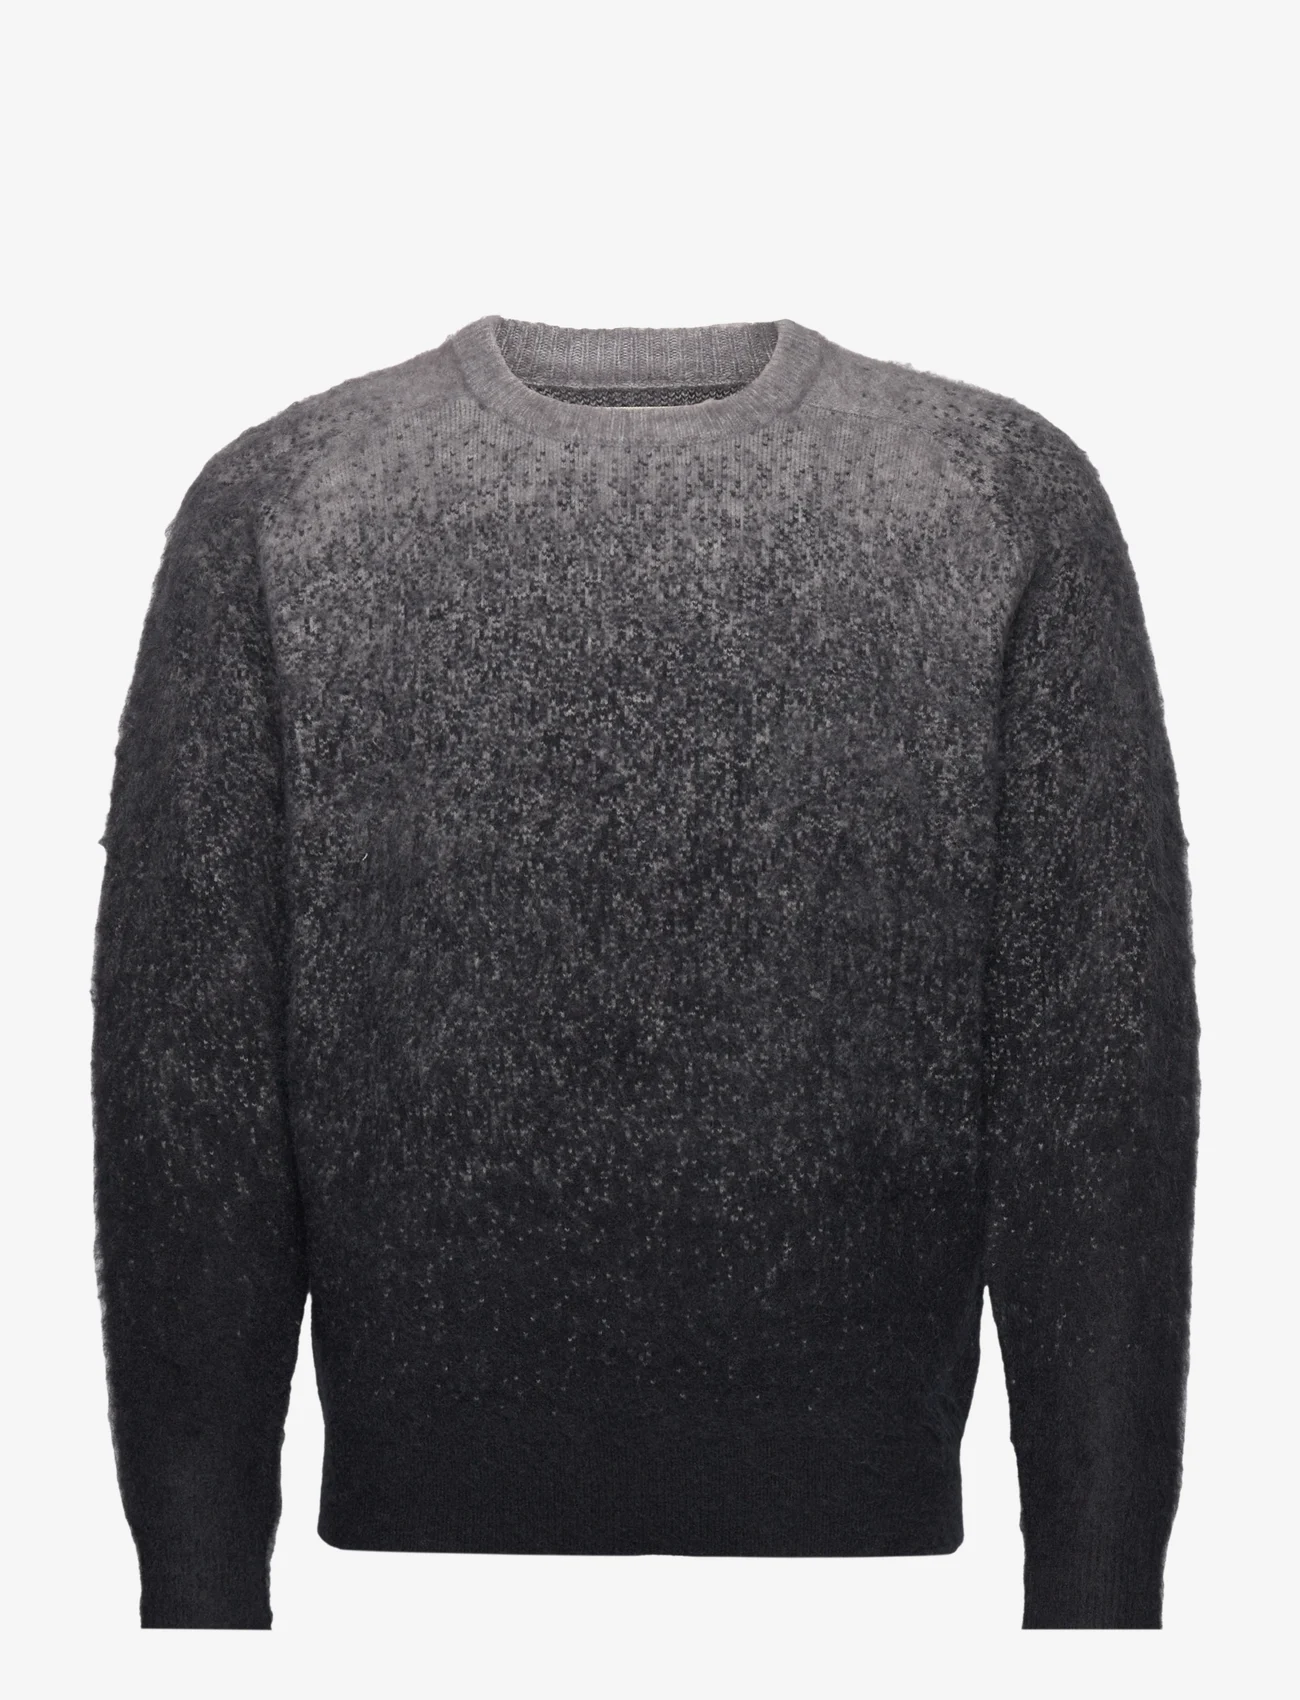 Taikan - Gradient Knit Sweater-Black - perusneuleet - black - 0